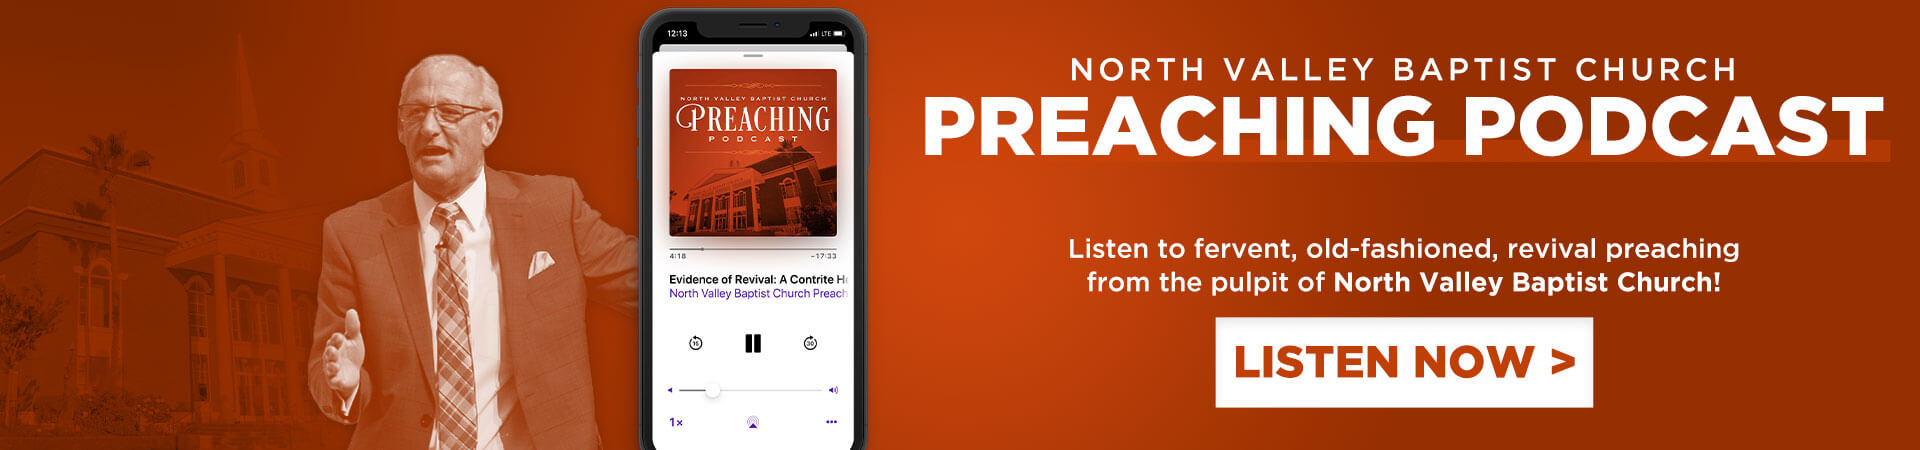 NVBC Preaching Podcast